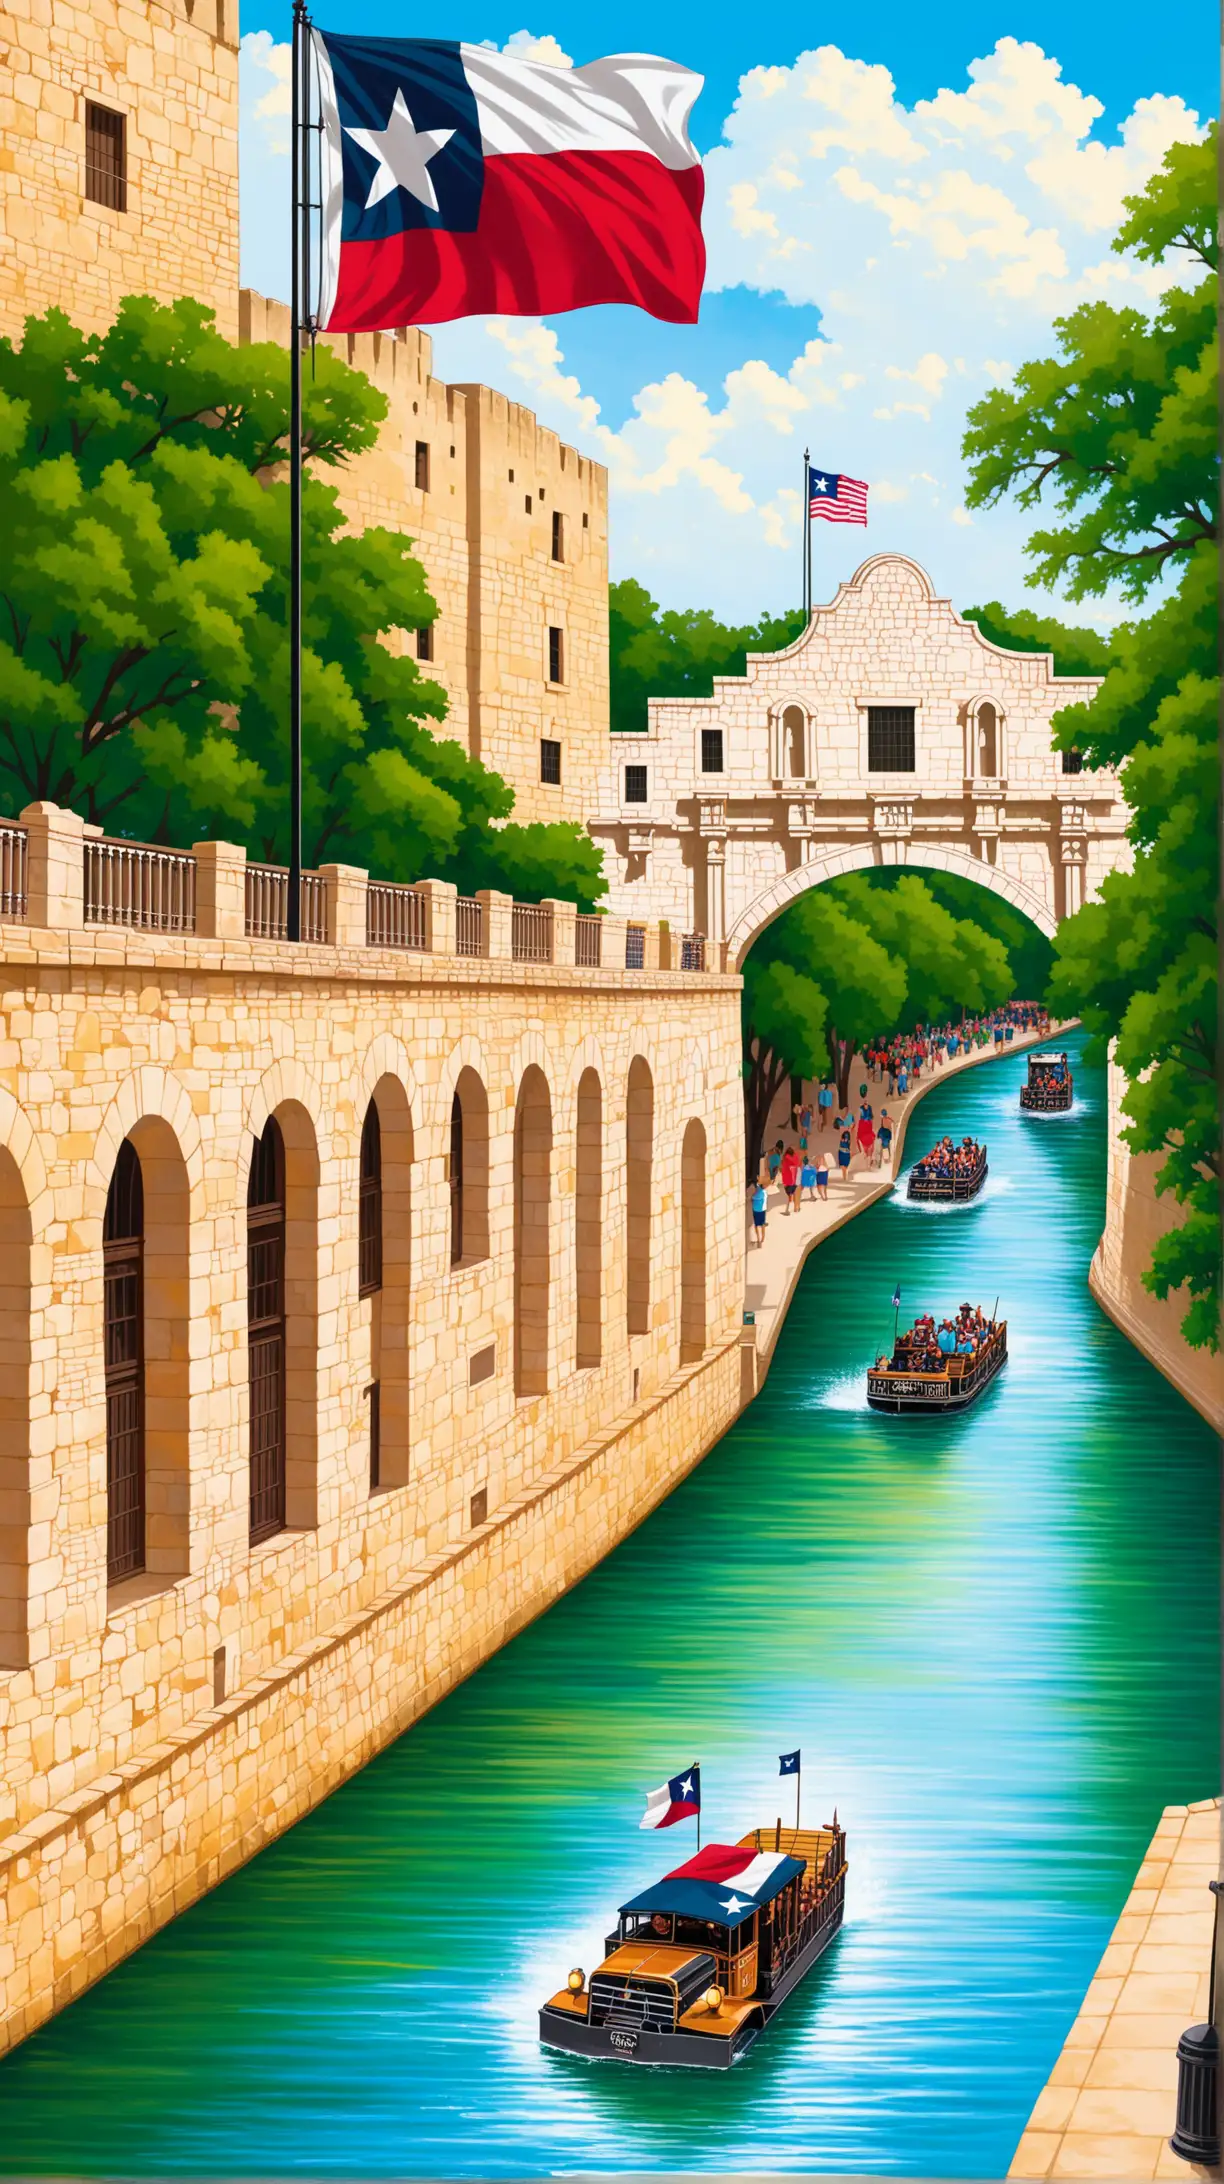 poster of alamo, texas flag and san antonio riverwalk